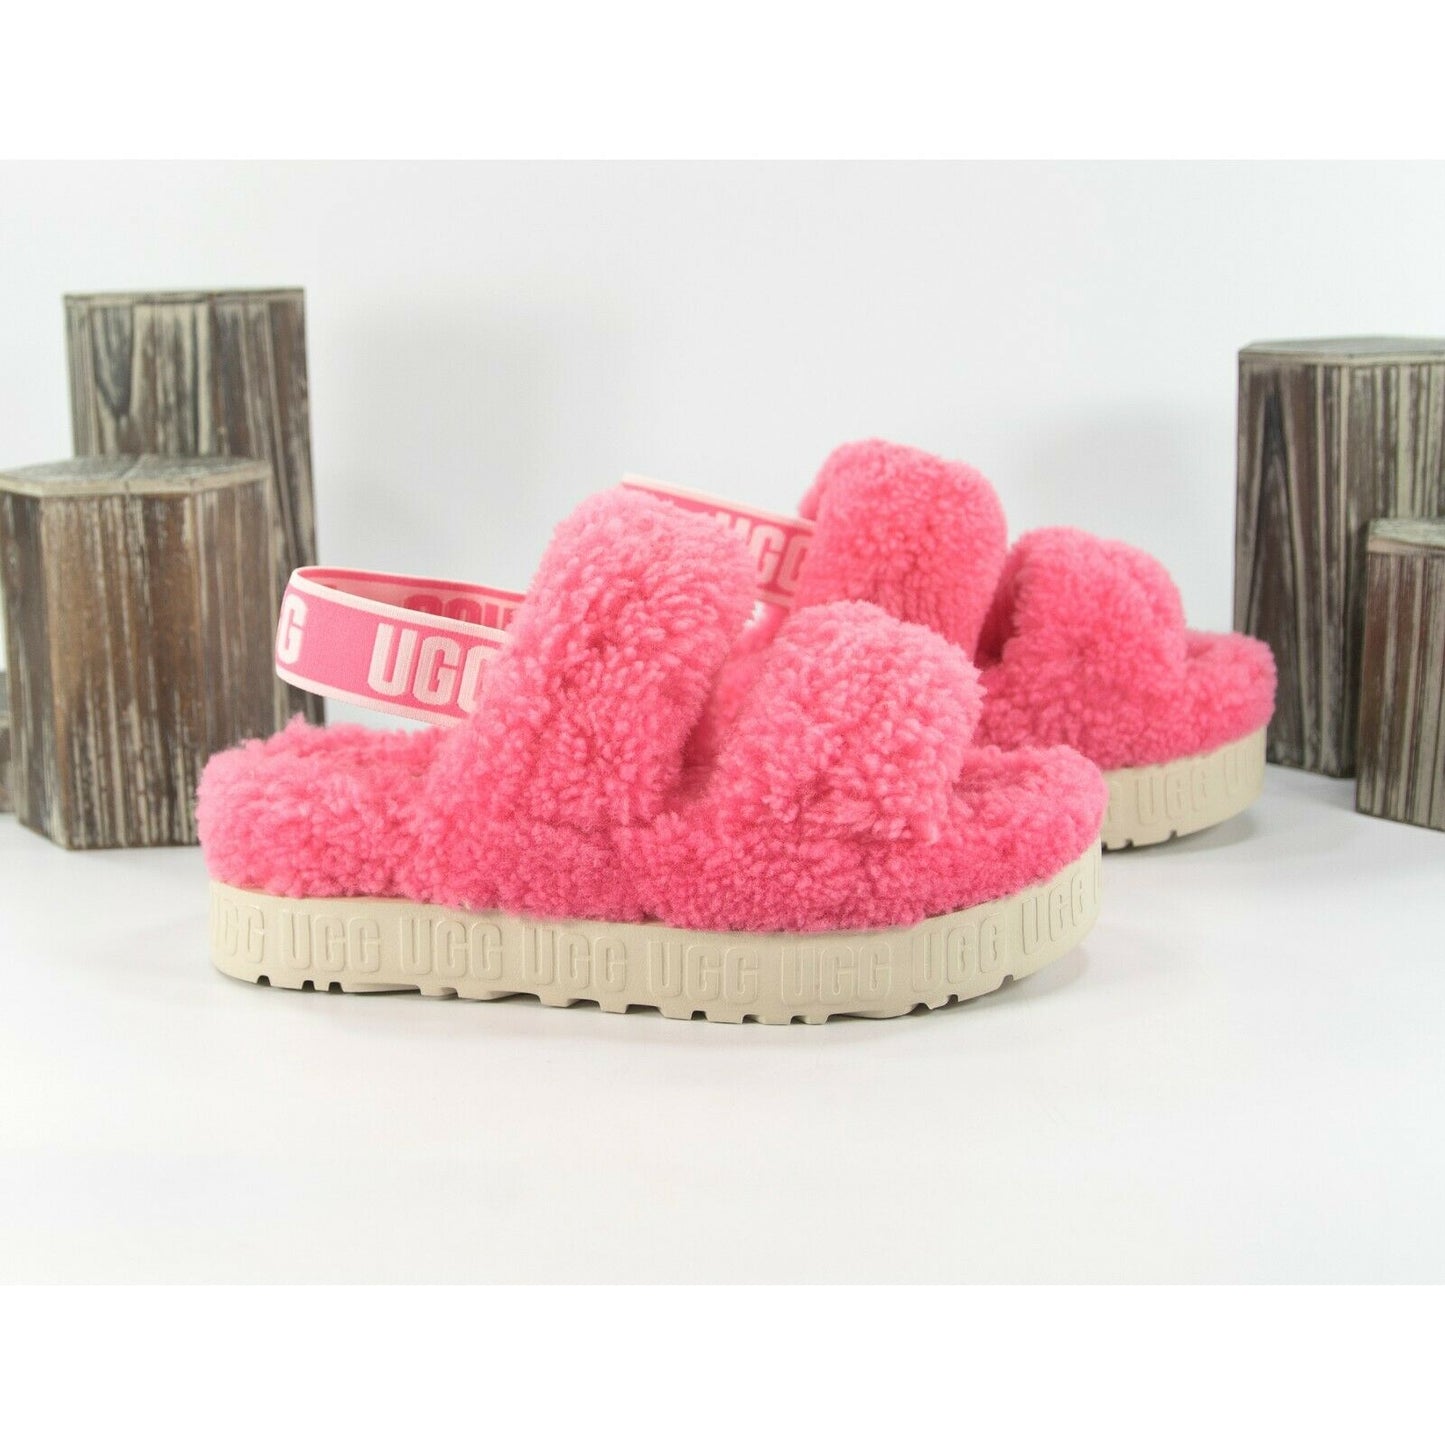 UGG Fluffita Oh Yea Pink Rose Sheepskin Fur Slippers Slides Sandals Sz 6 NIB